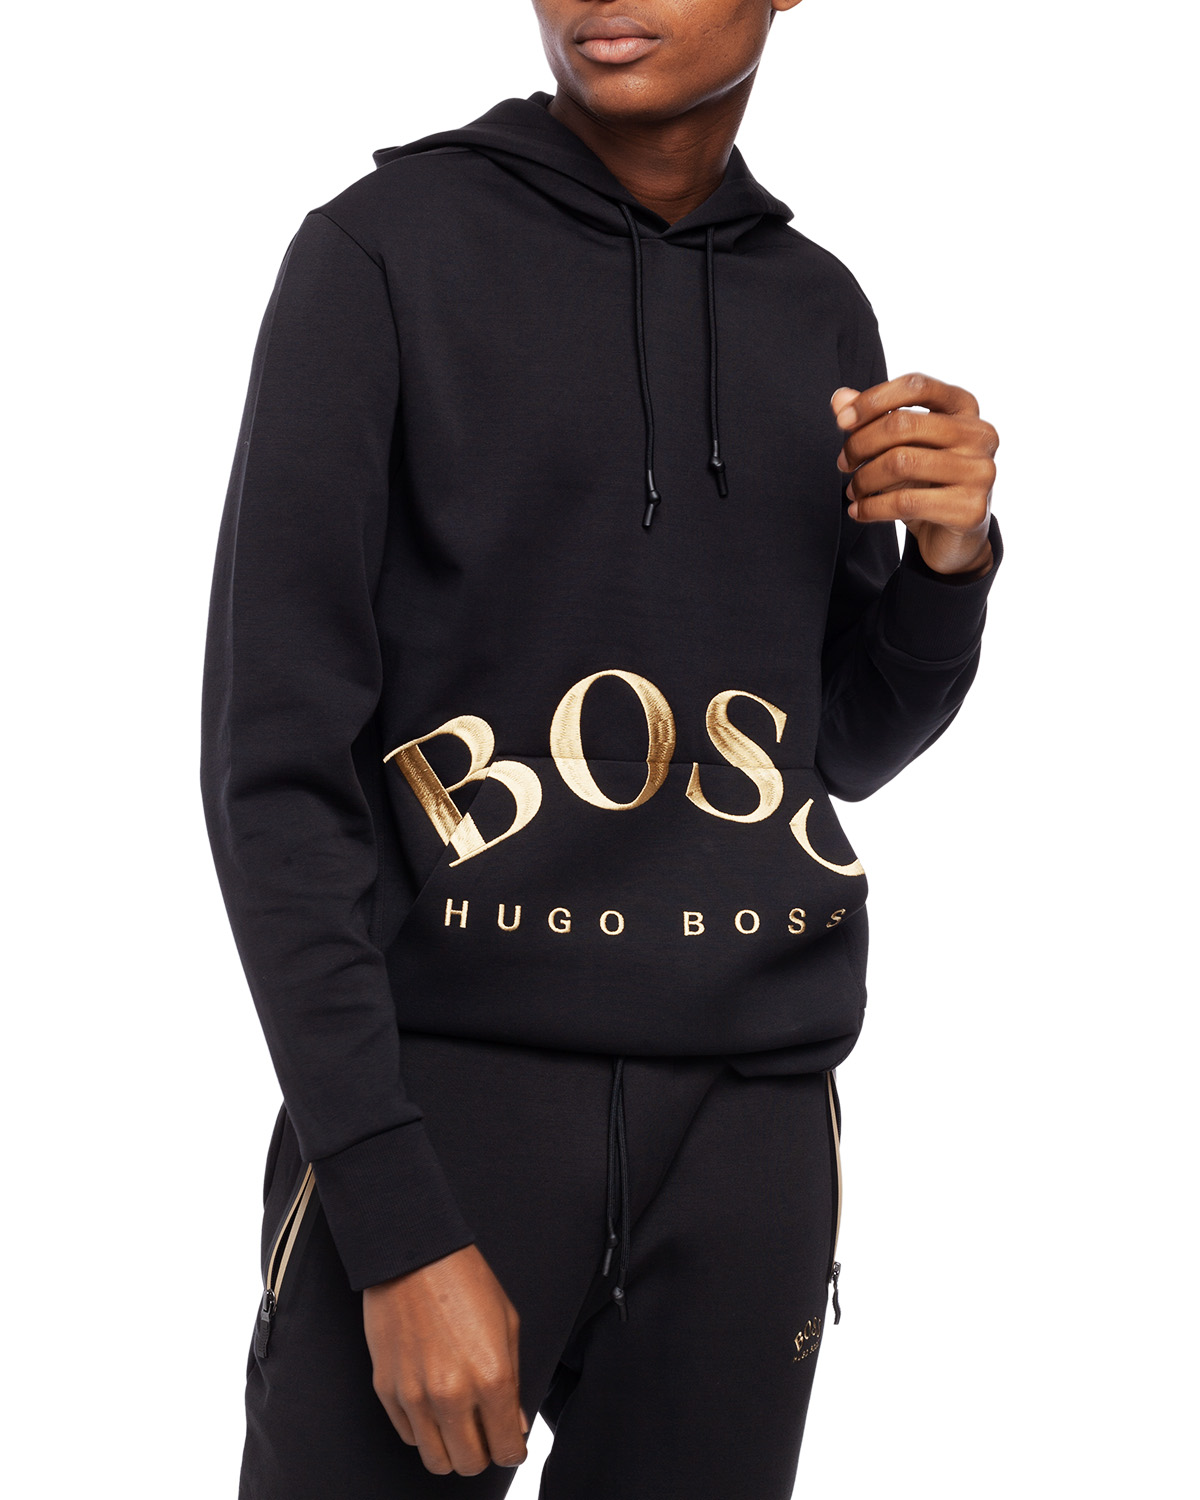 hugo boss hoodie black and gold